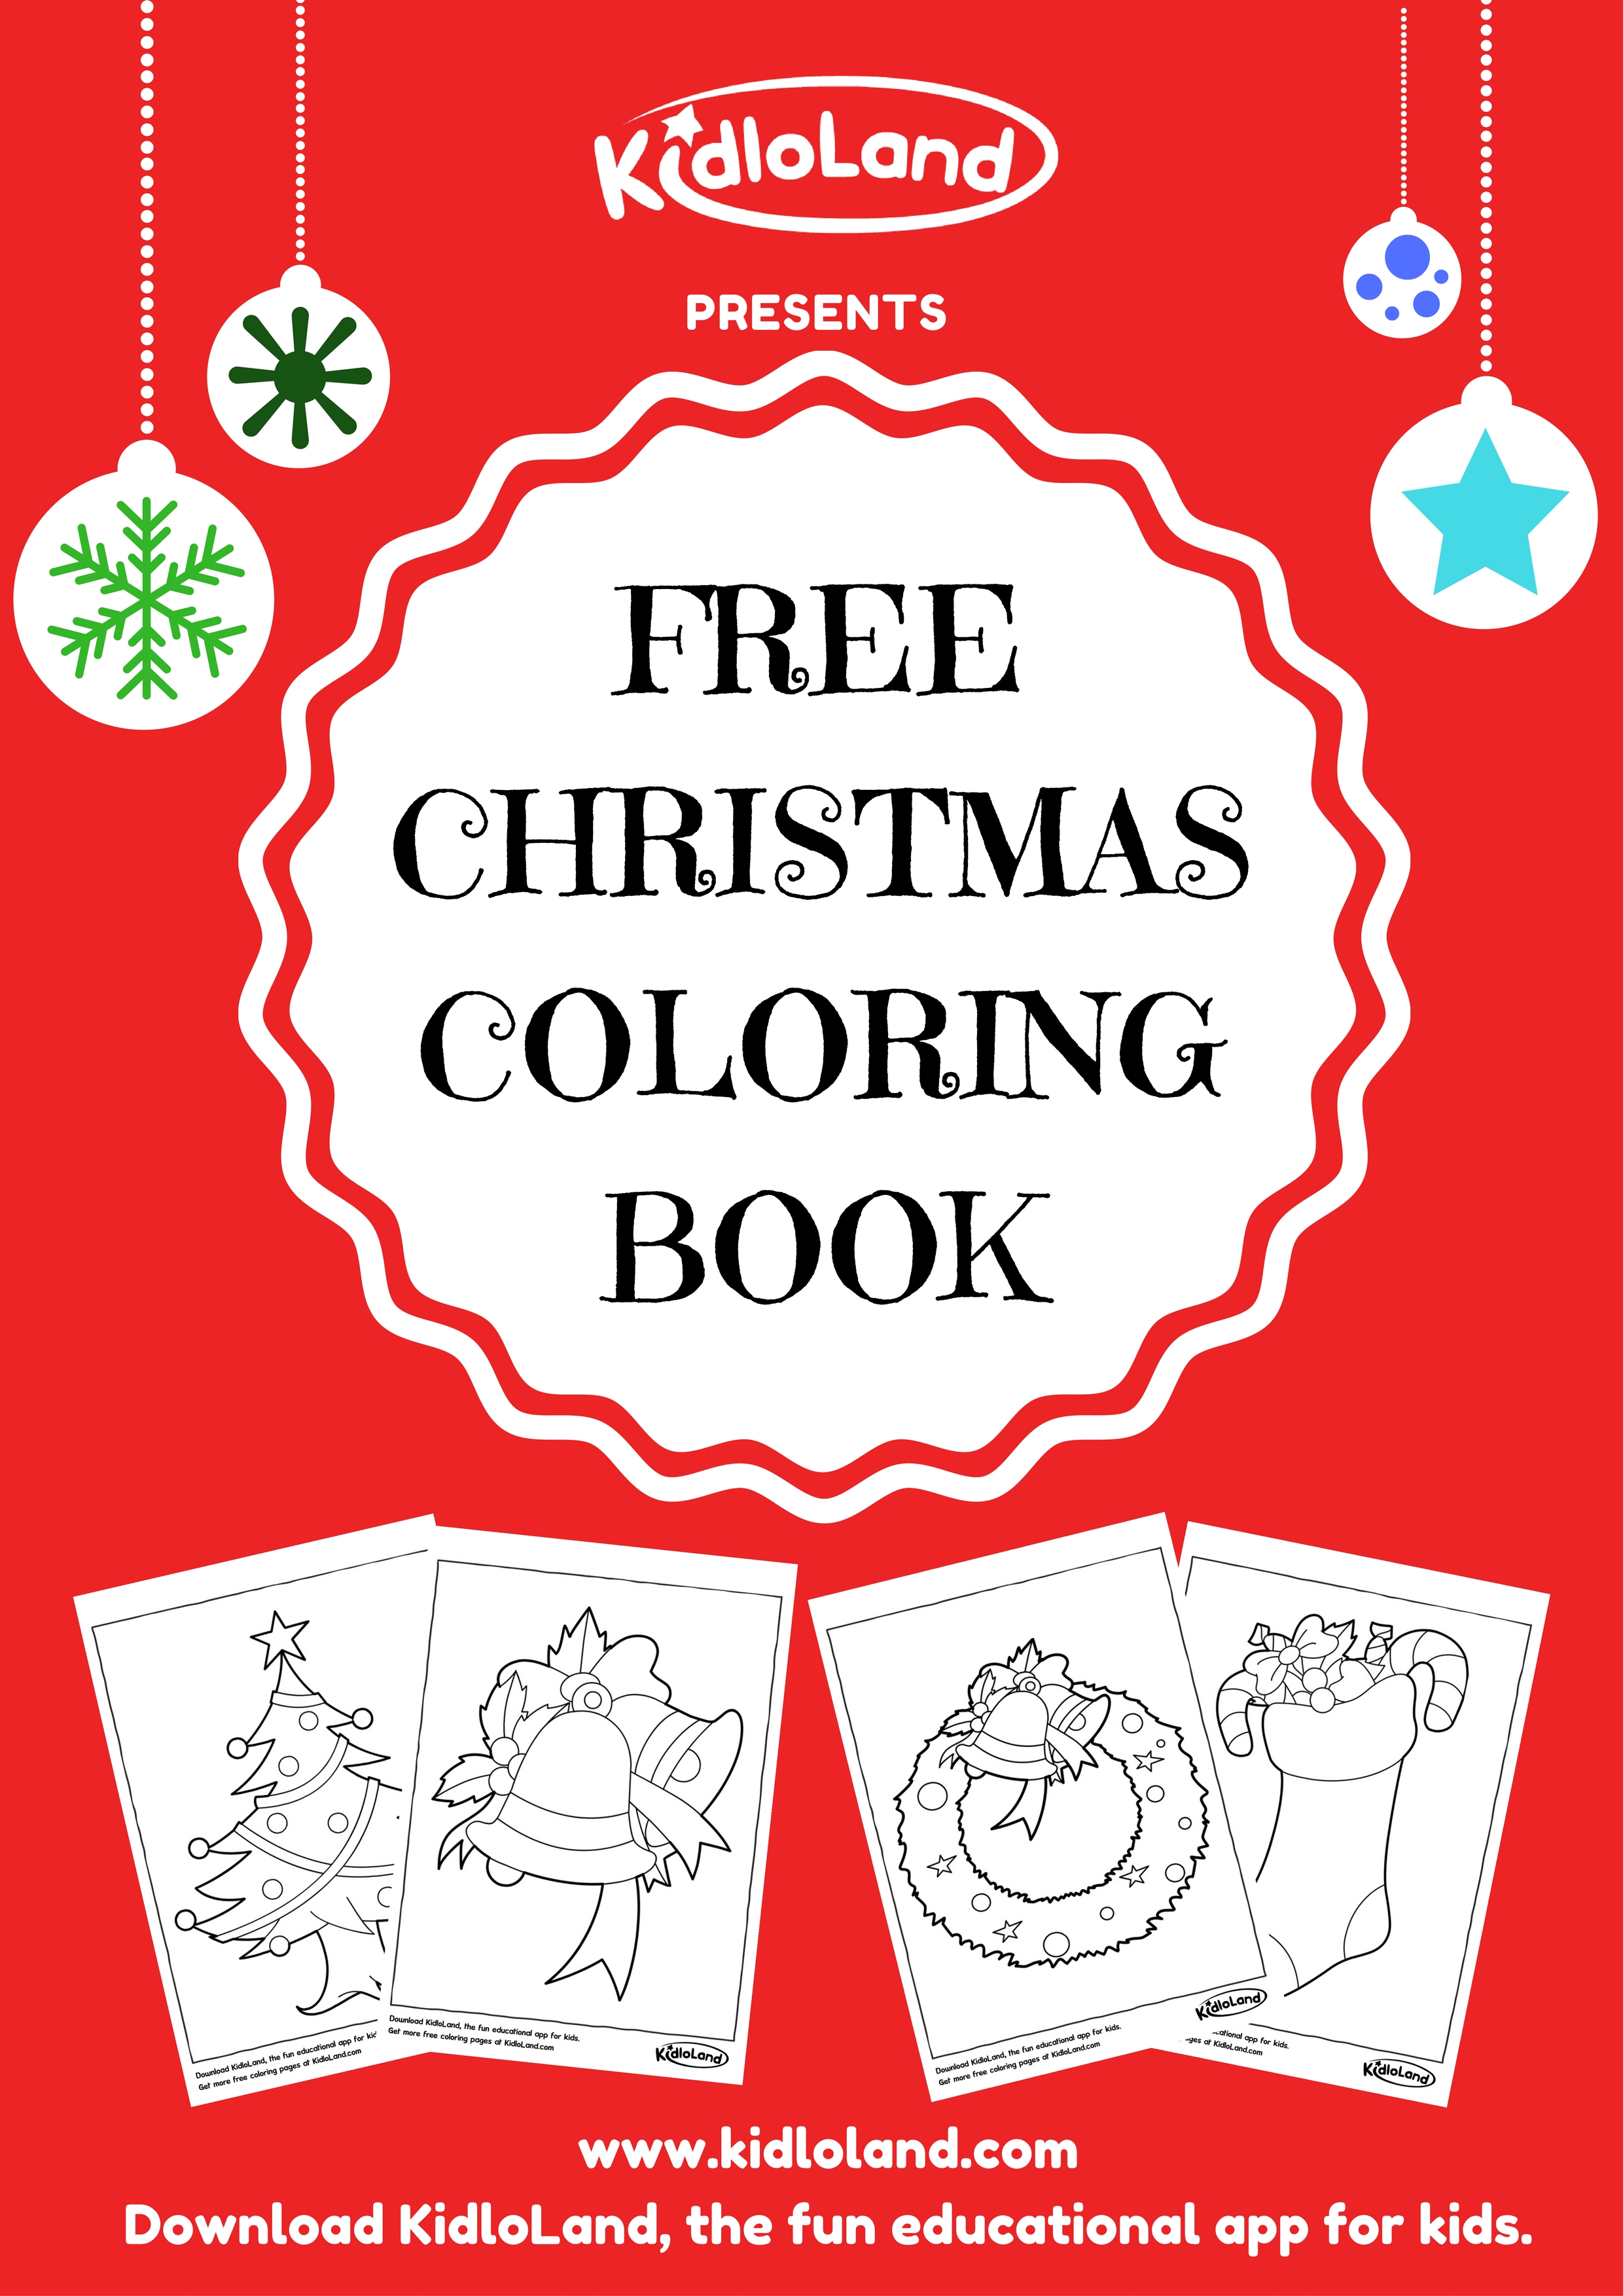 FREE CHRISTMAS COLORING BOOK   KidloLand